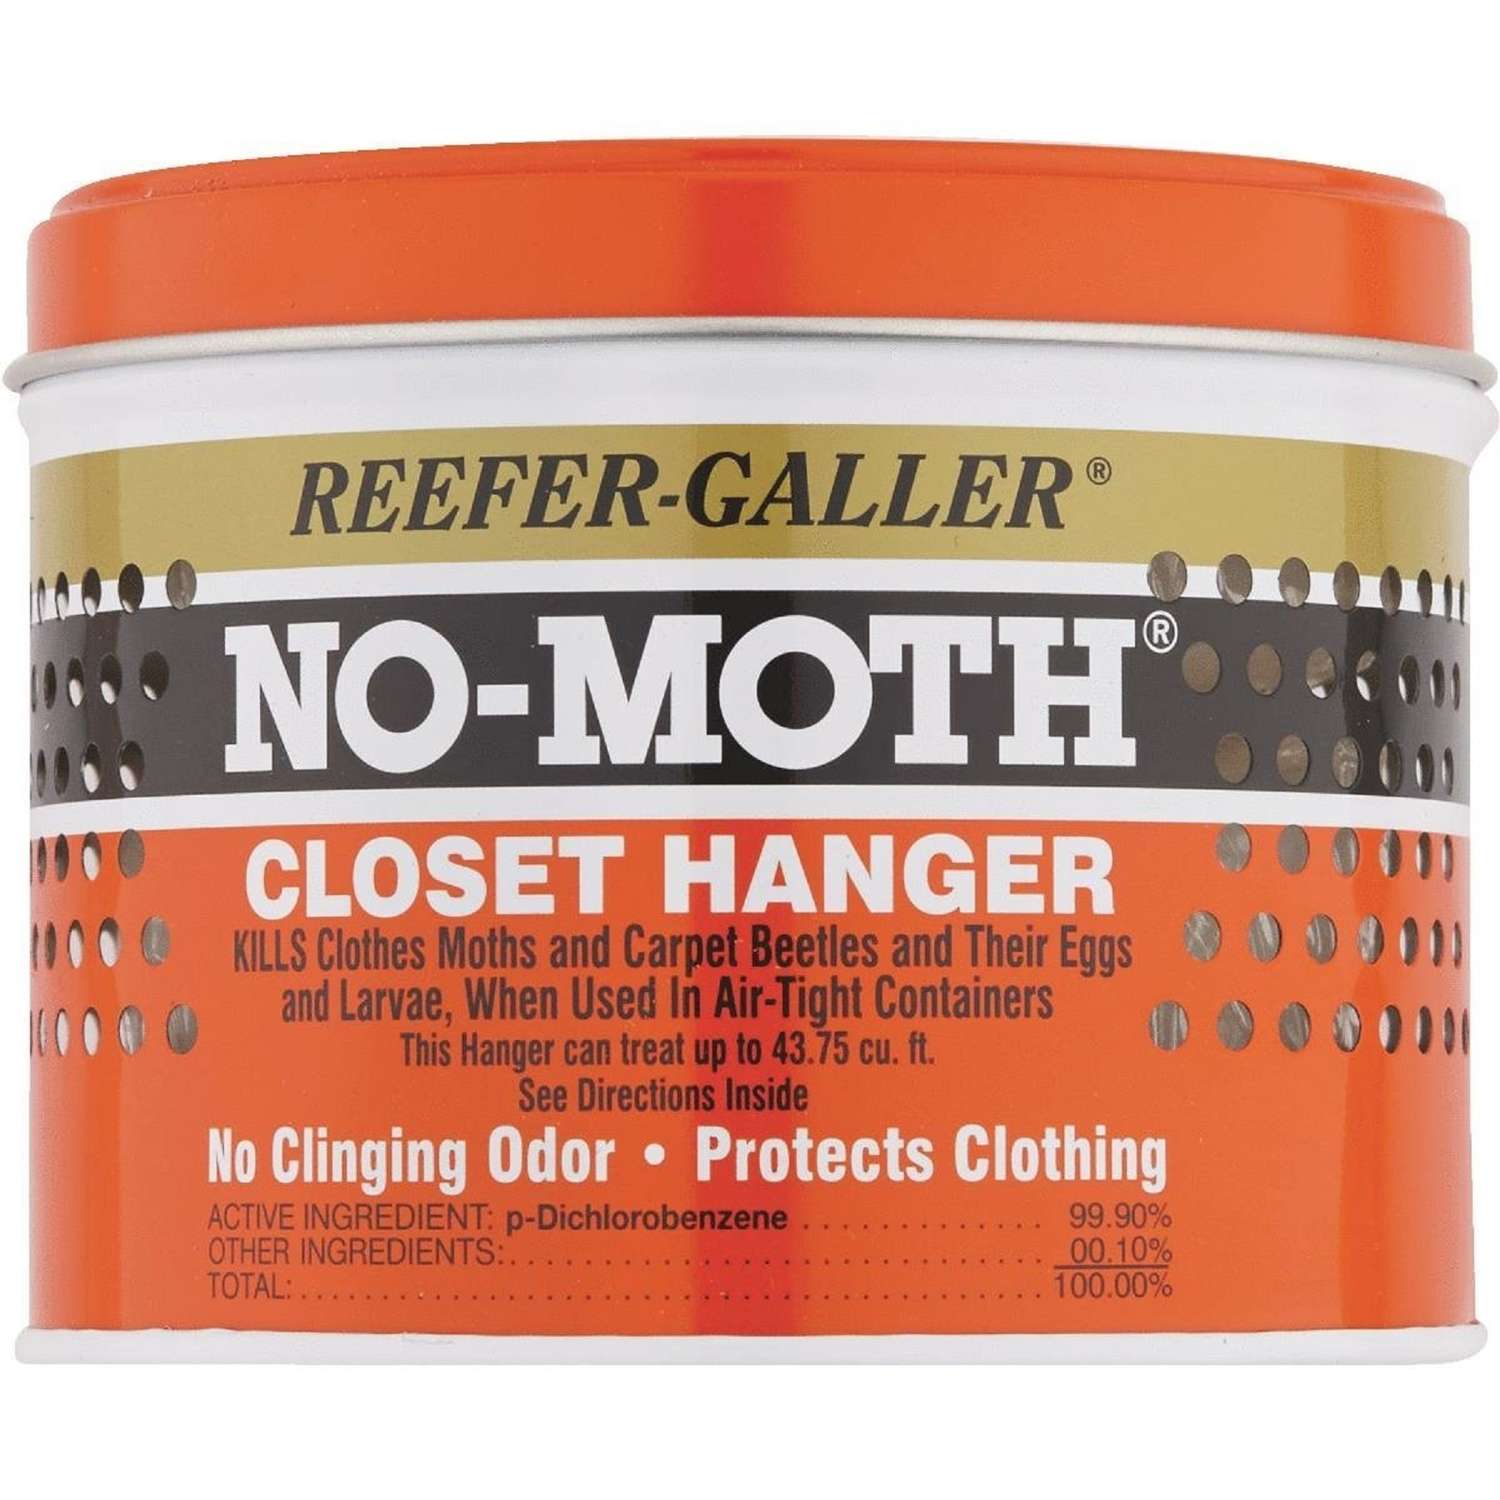 No-Moth Closet Hanger - 14 oz tin